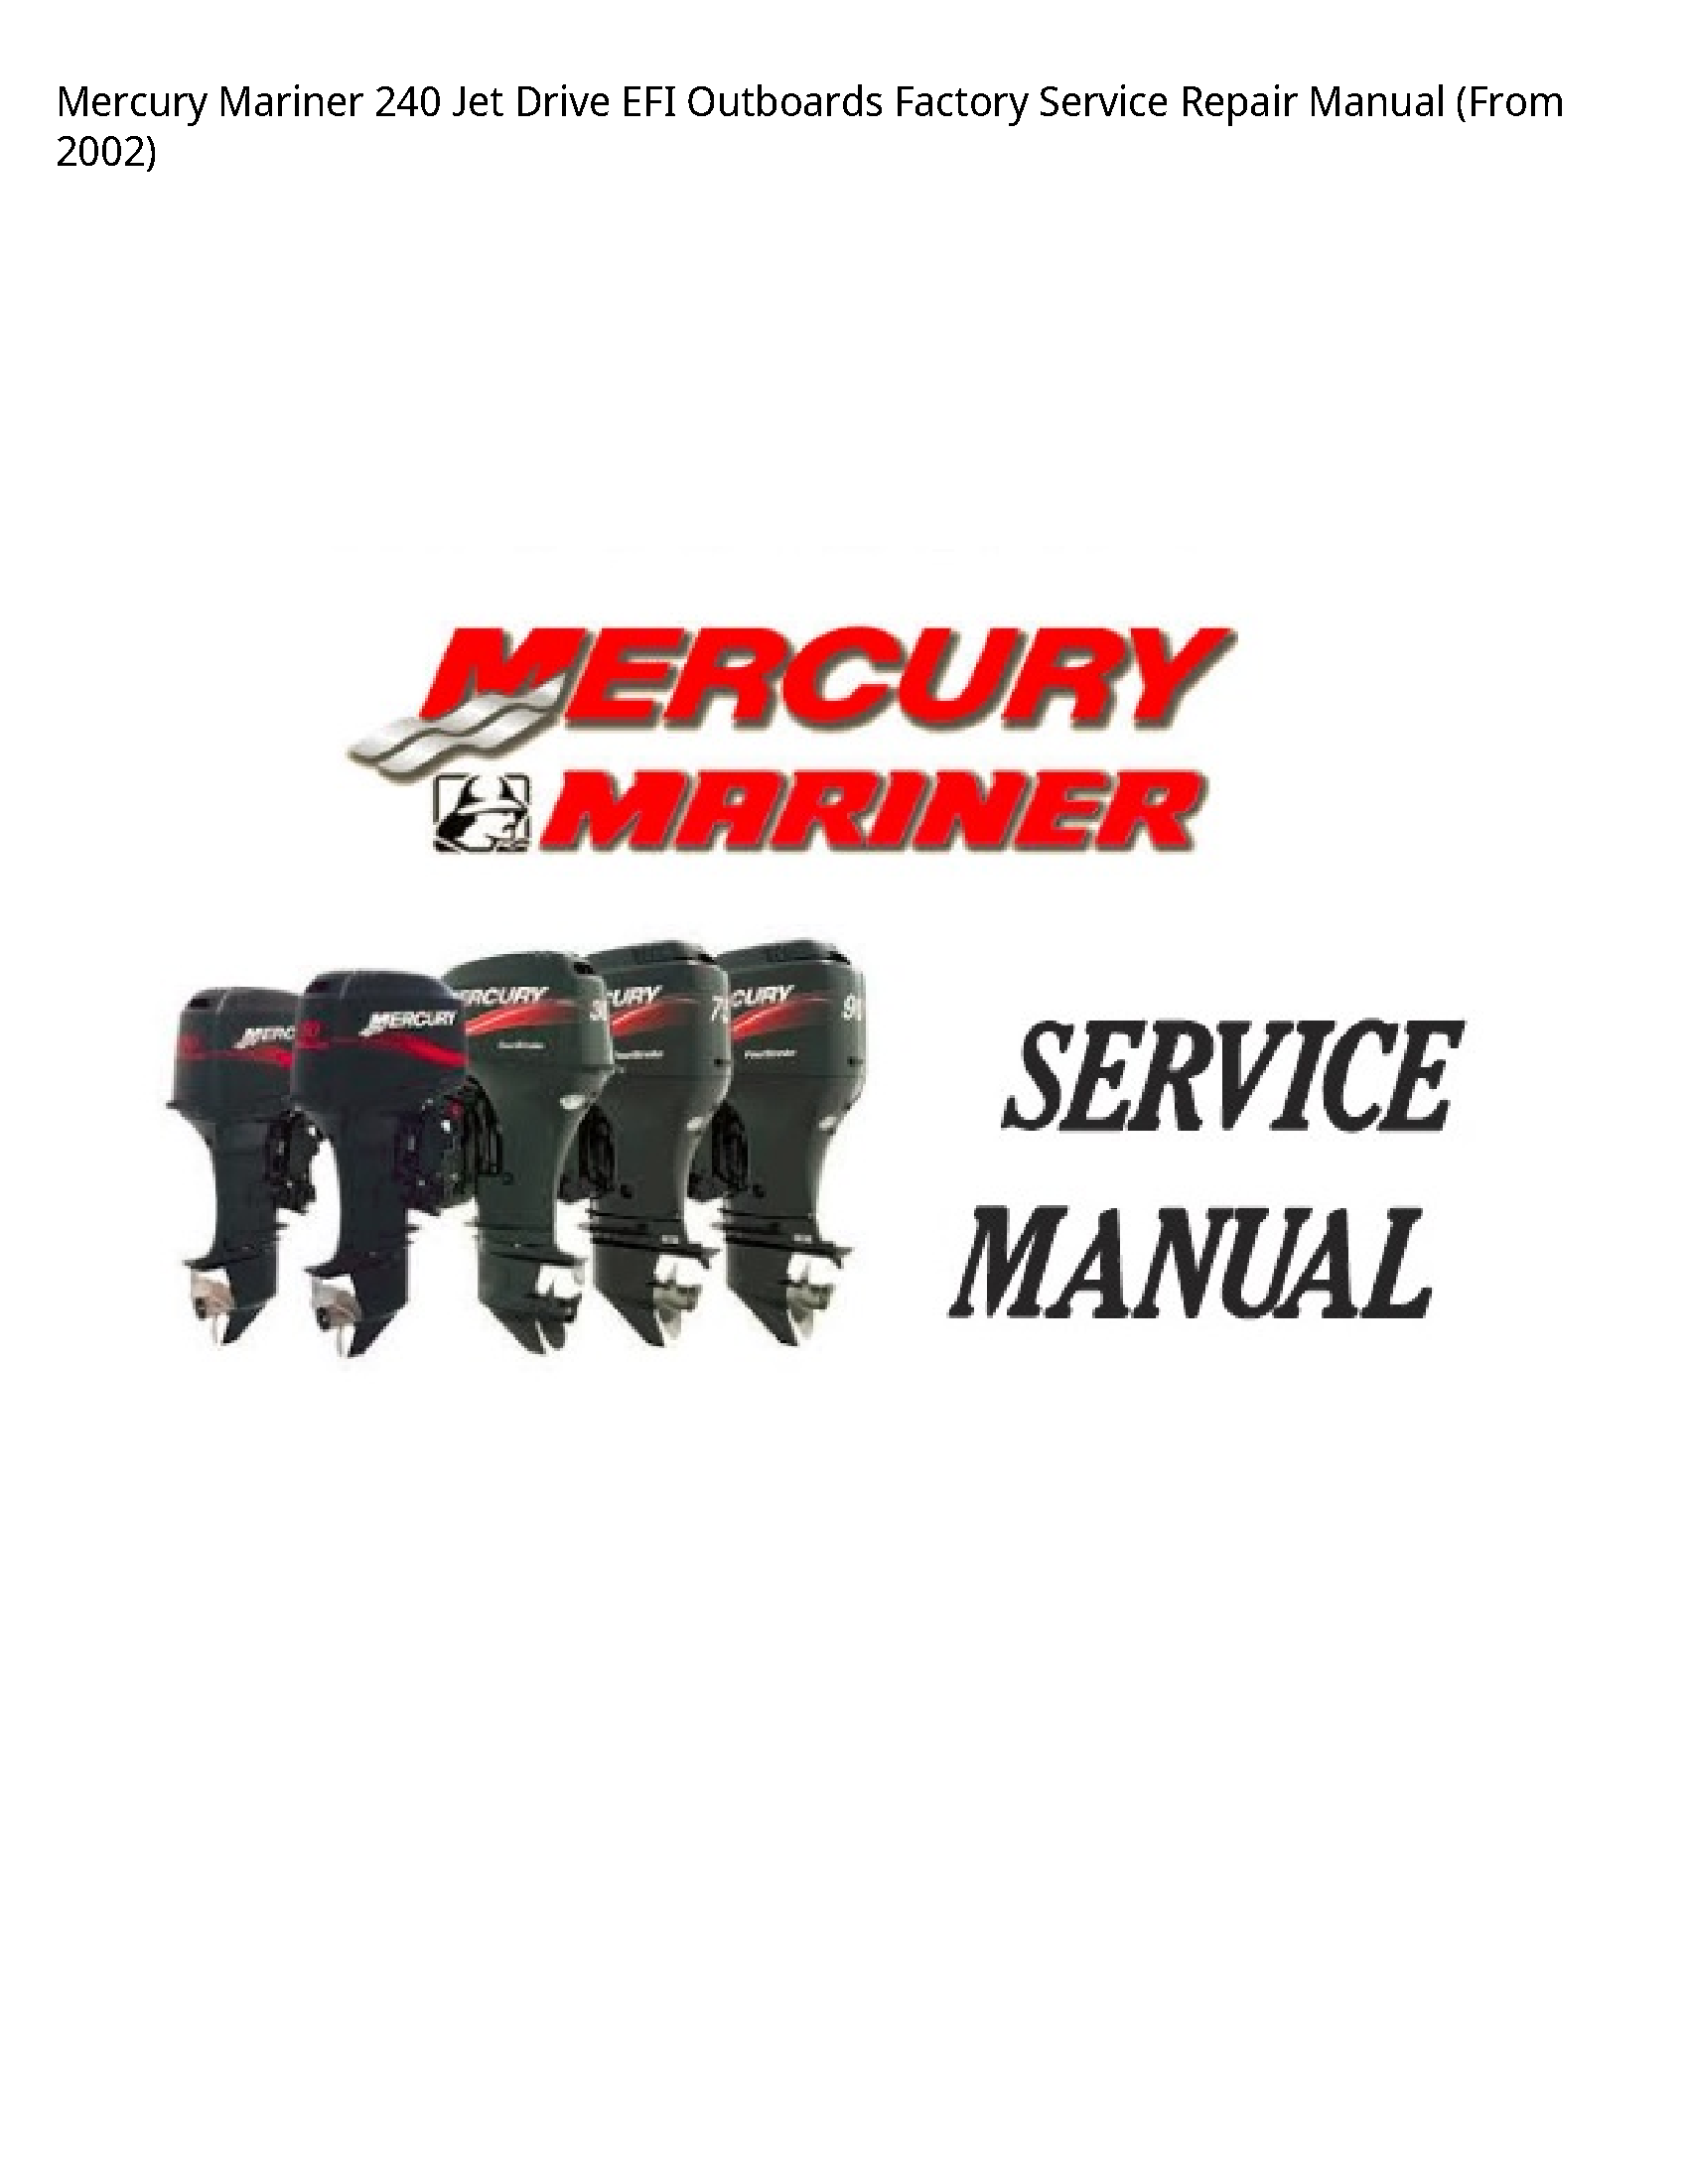 Mercury Mariner 240 Jet Drive EFI Outboards Factory manual